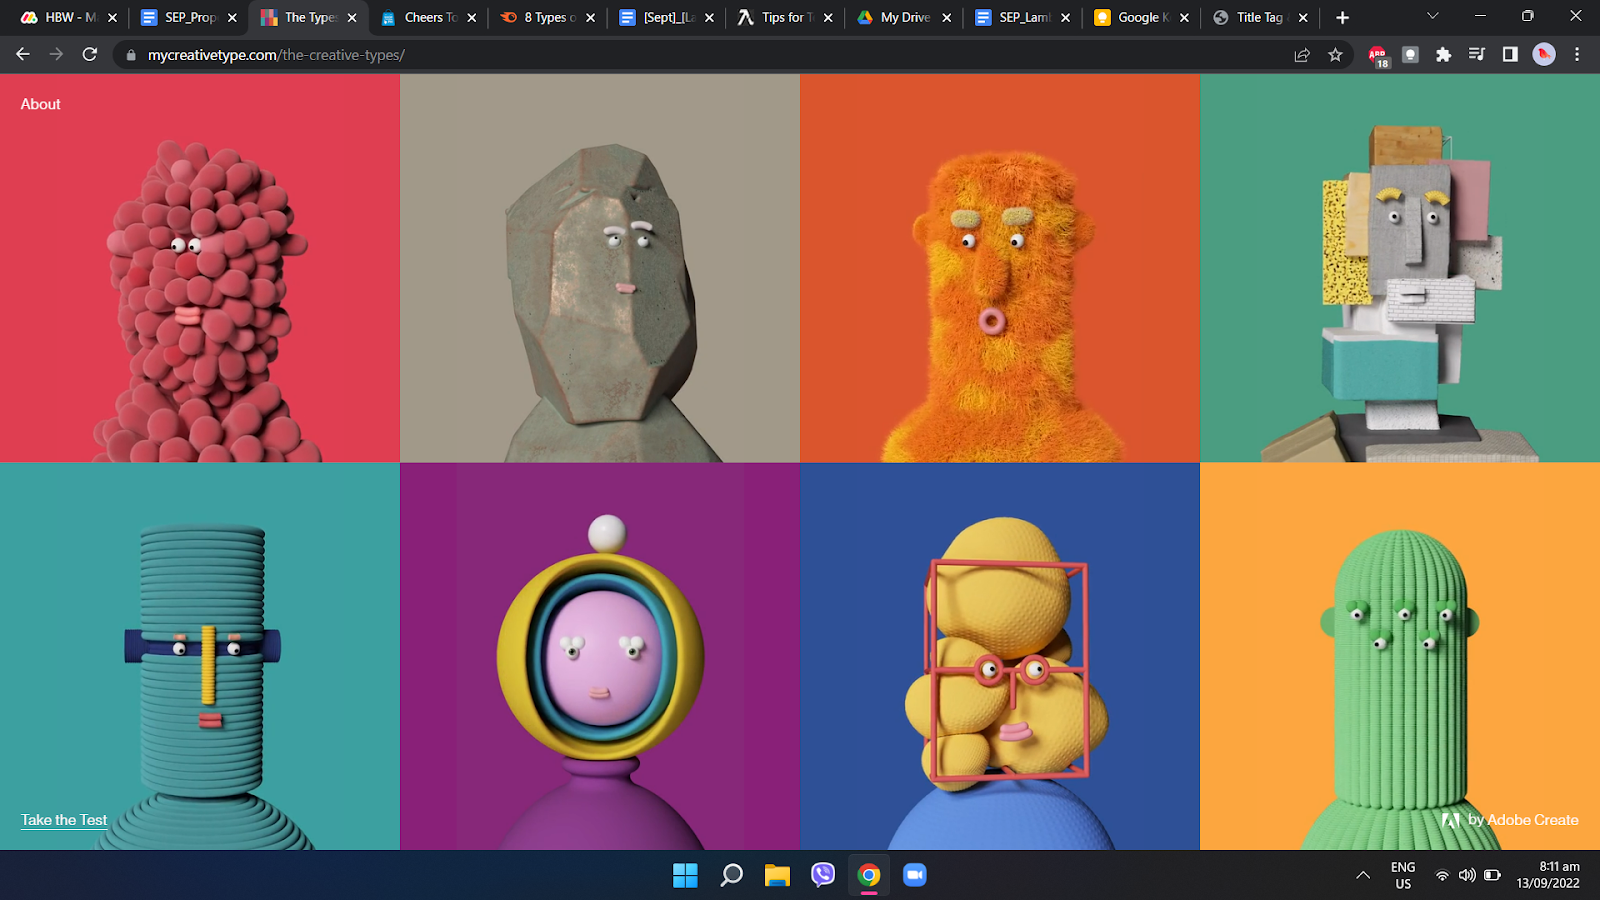 3D character avatars